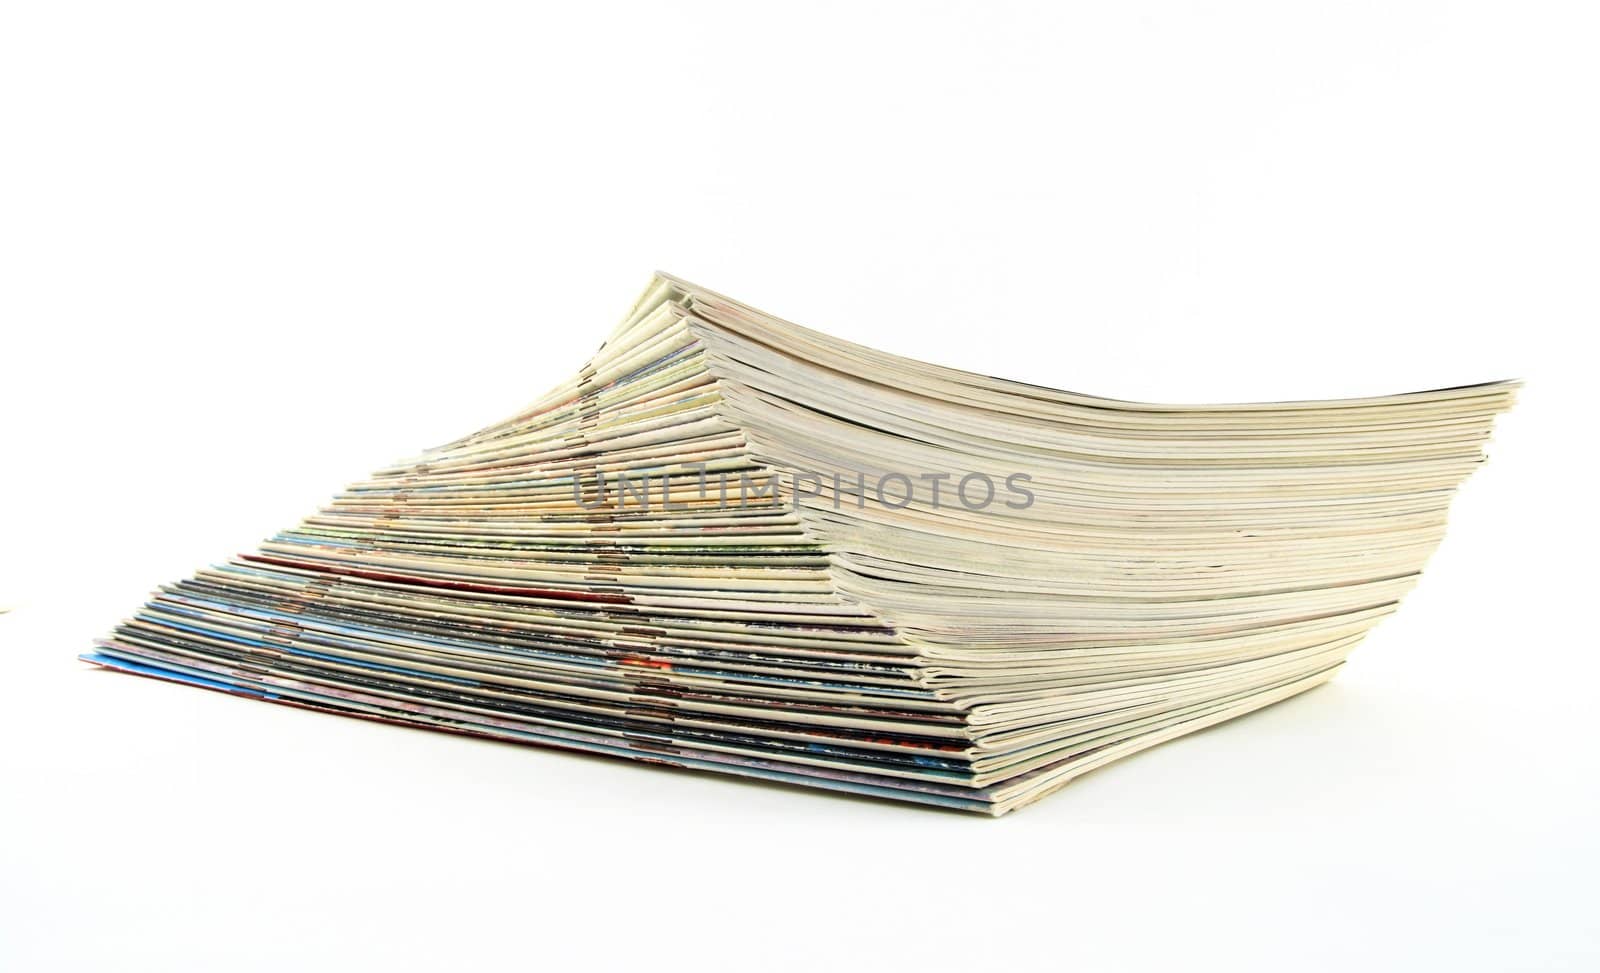 Pile of magazines by anikasalsera